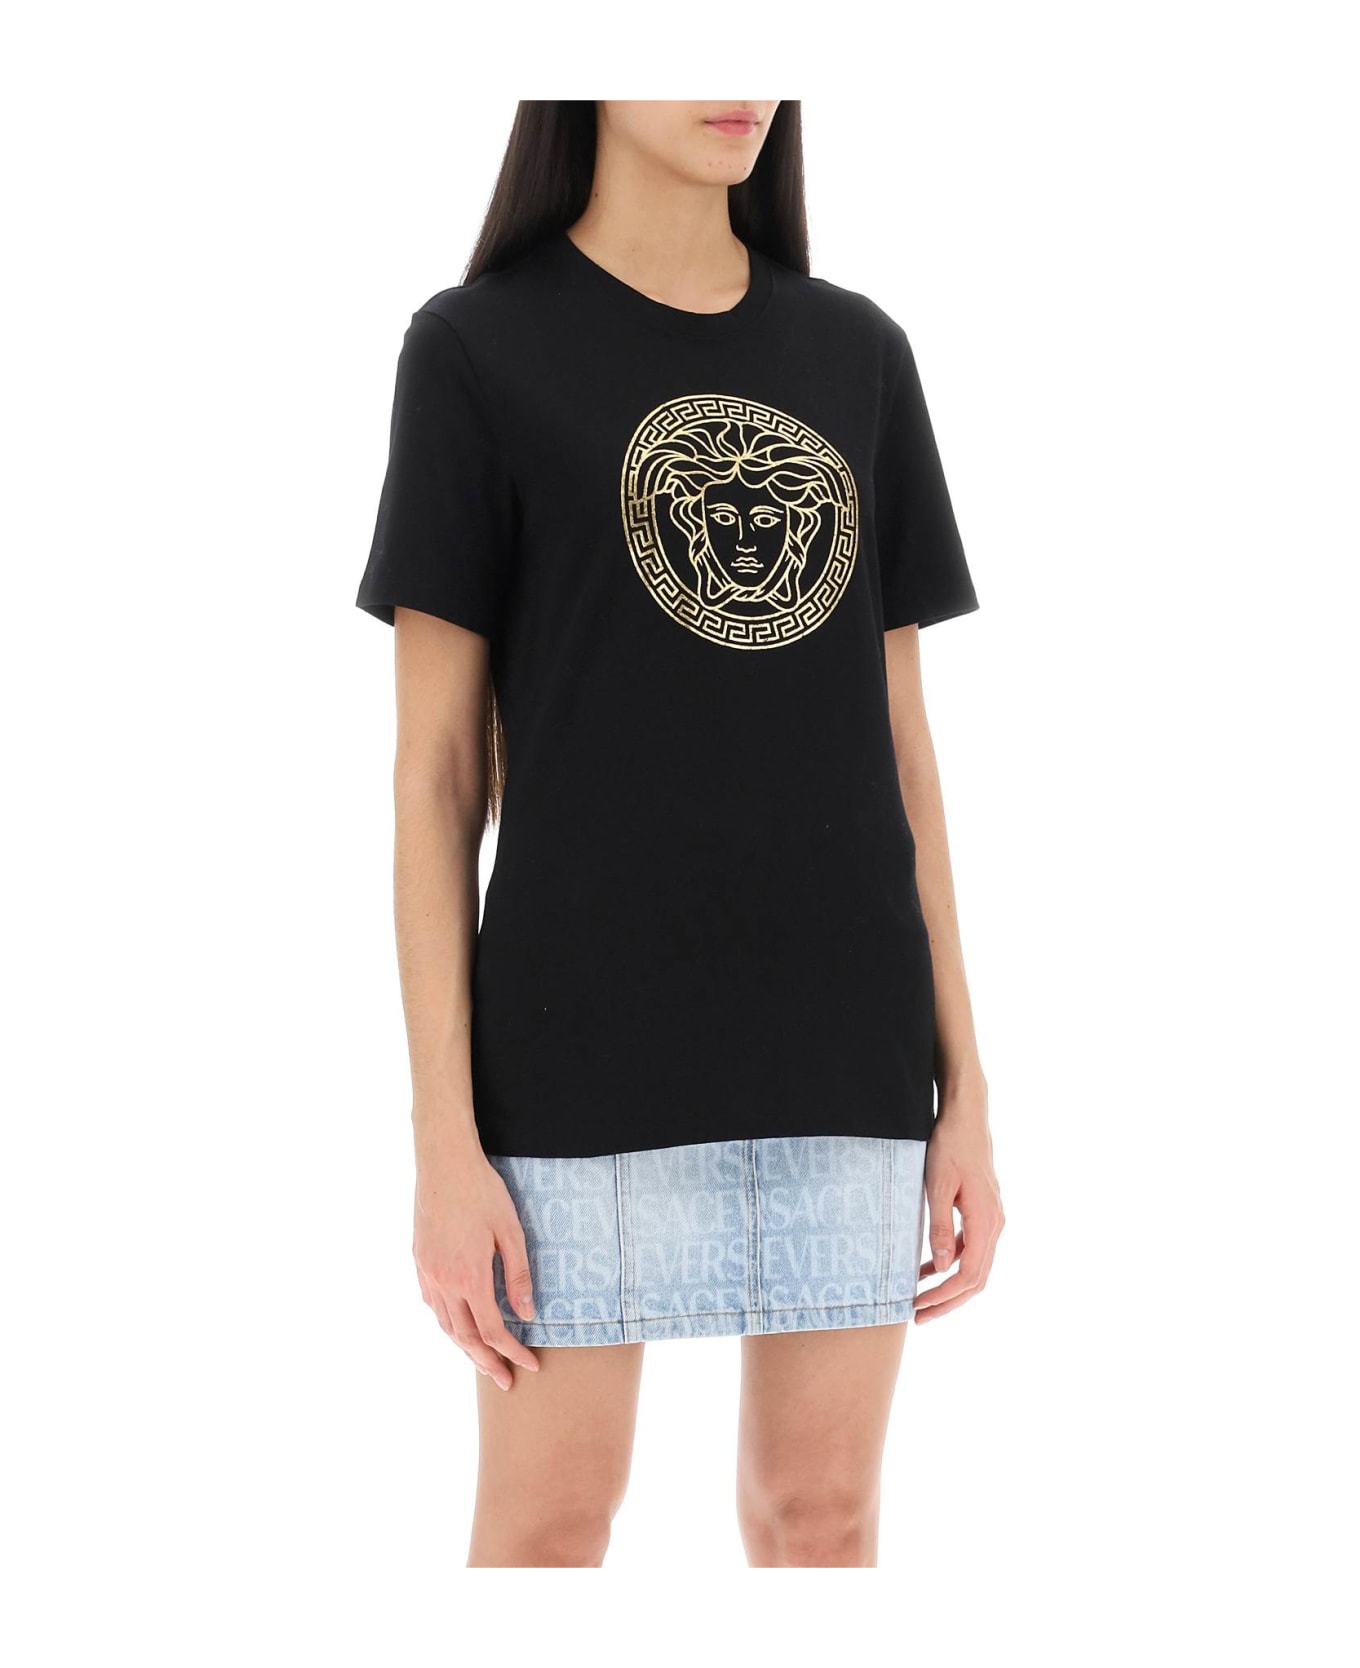 Versace Medusa T-shirt - Black